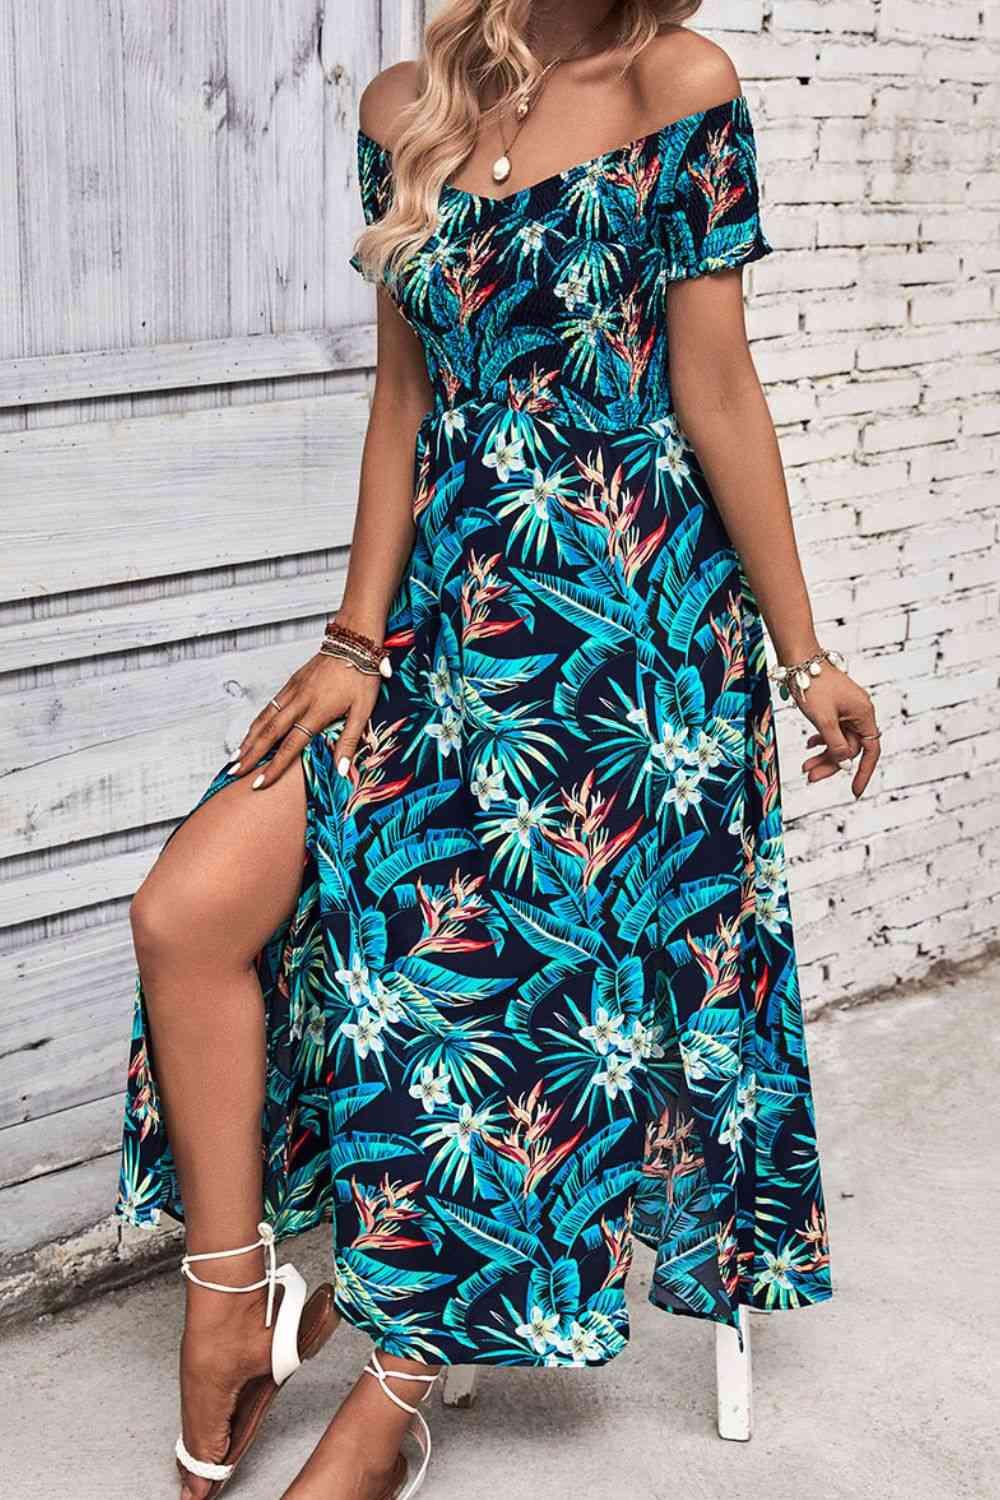 a woman wearing a blue tropical print dress